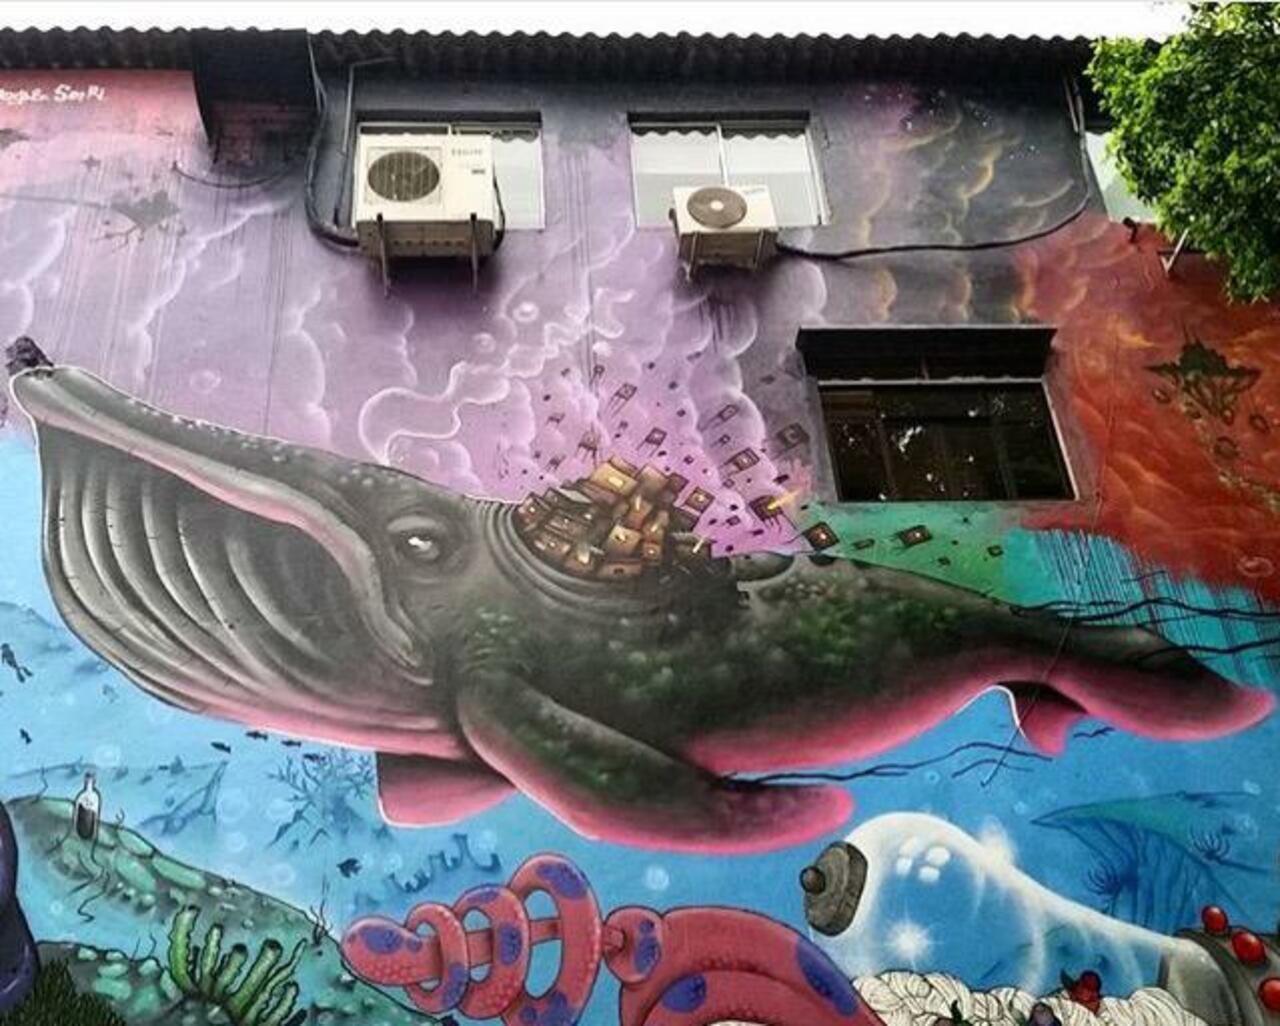 Nice! Street Art by joks_johnes Pinheiros, São Paulo 

#art #mural #graffiti #streetart http://t.co/ZXiB7sK7Ej MT @GoogleStreetArt